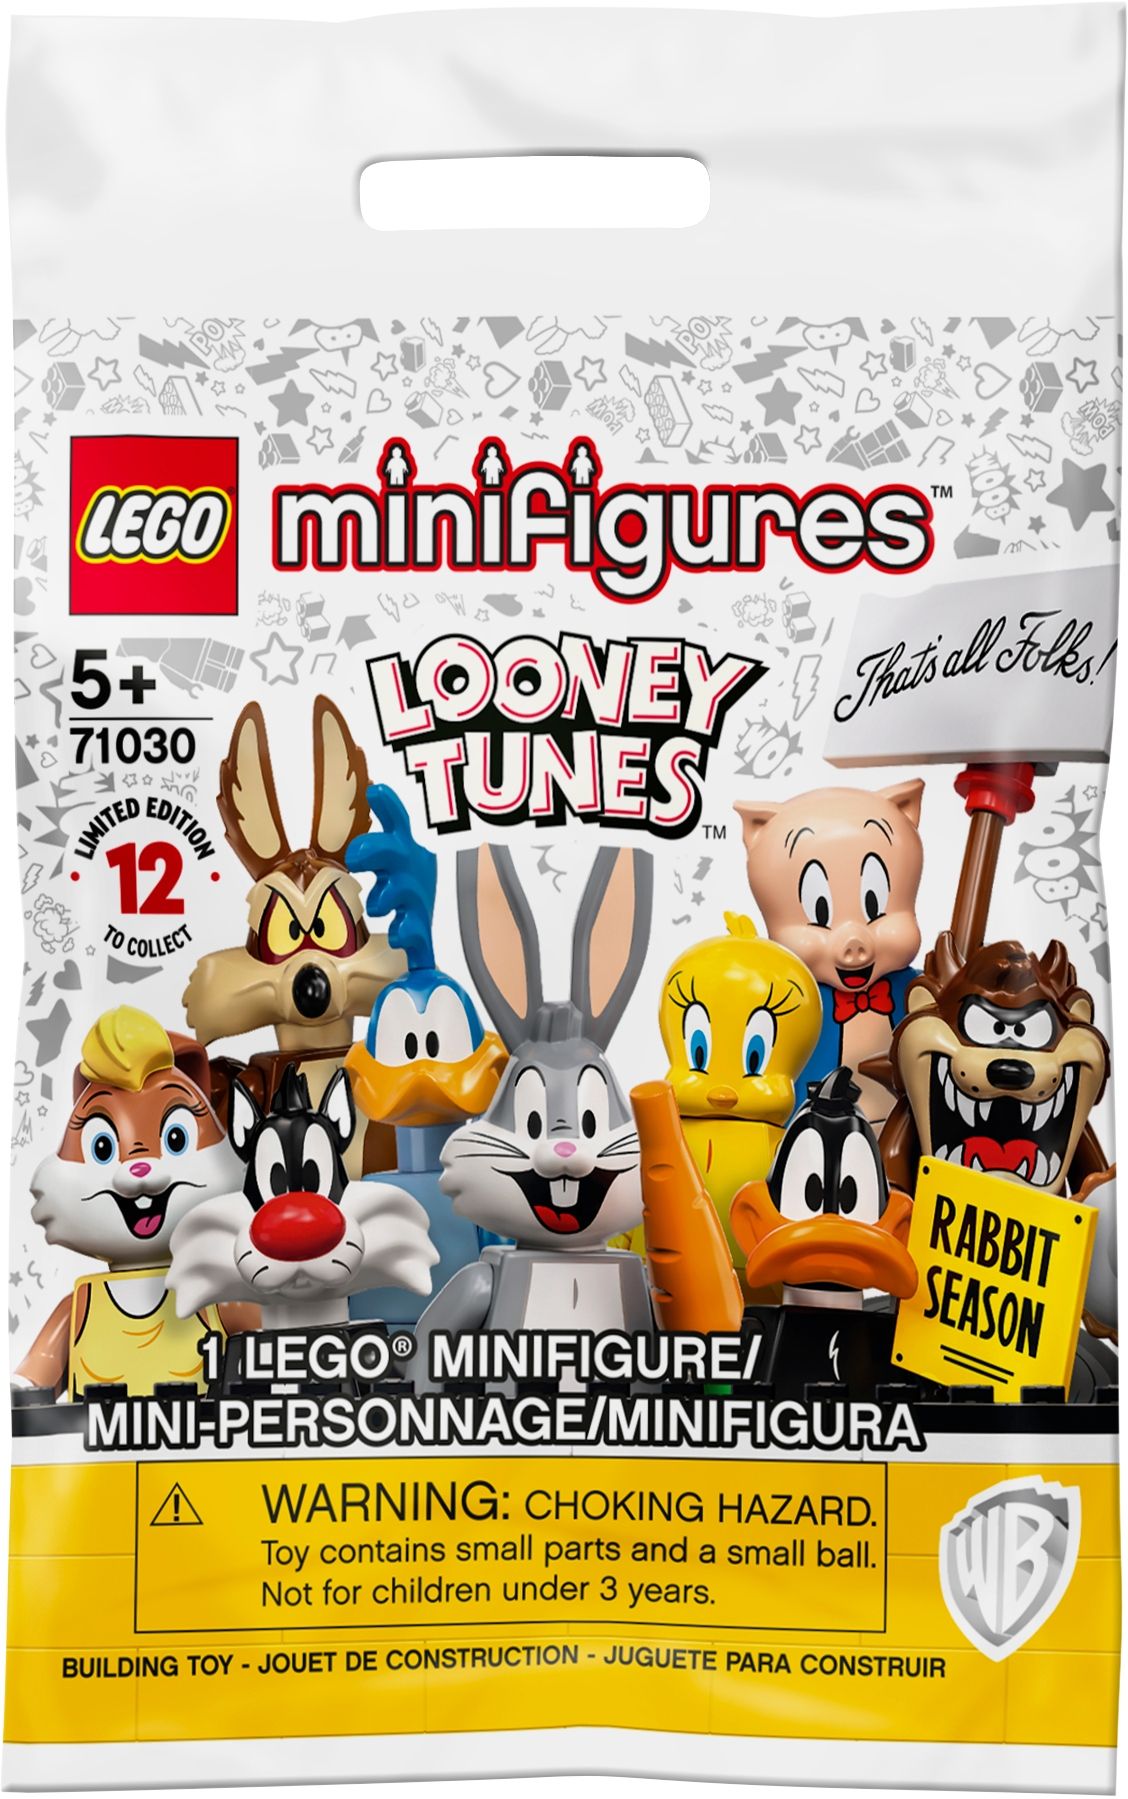 LEGO Collectable Minifigures 71030 Looney Tunes™ LEGO_71030_box4_v141.jpg